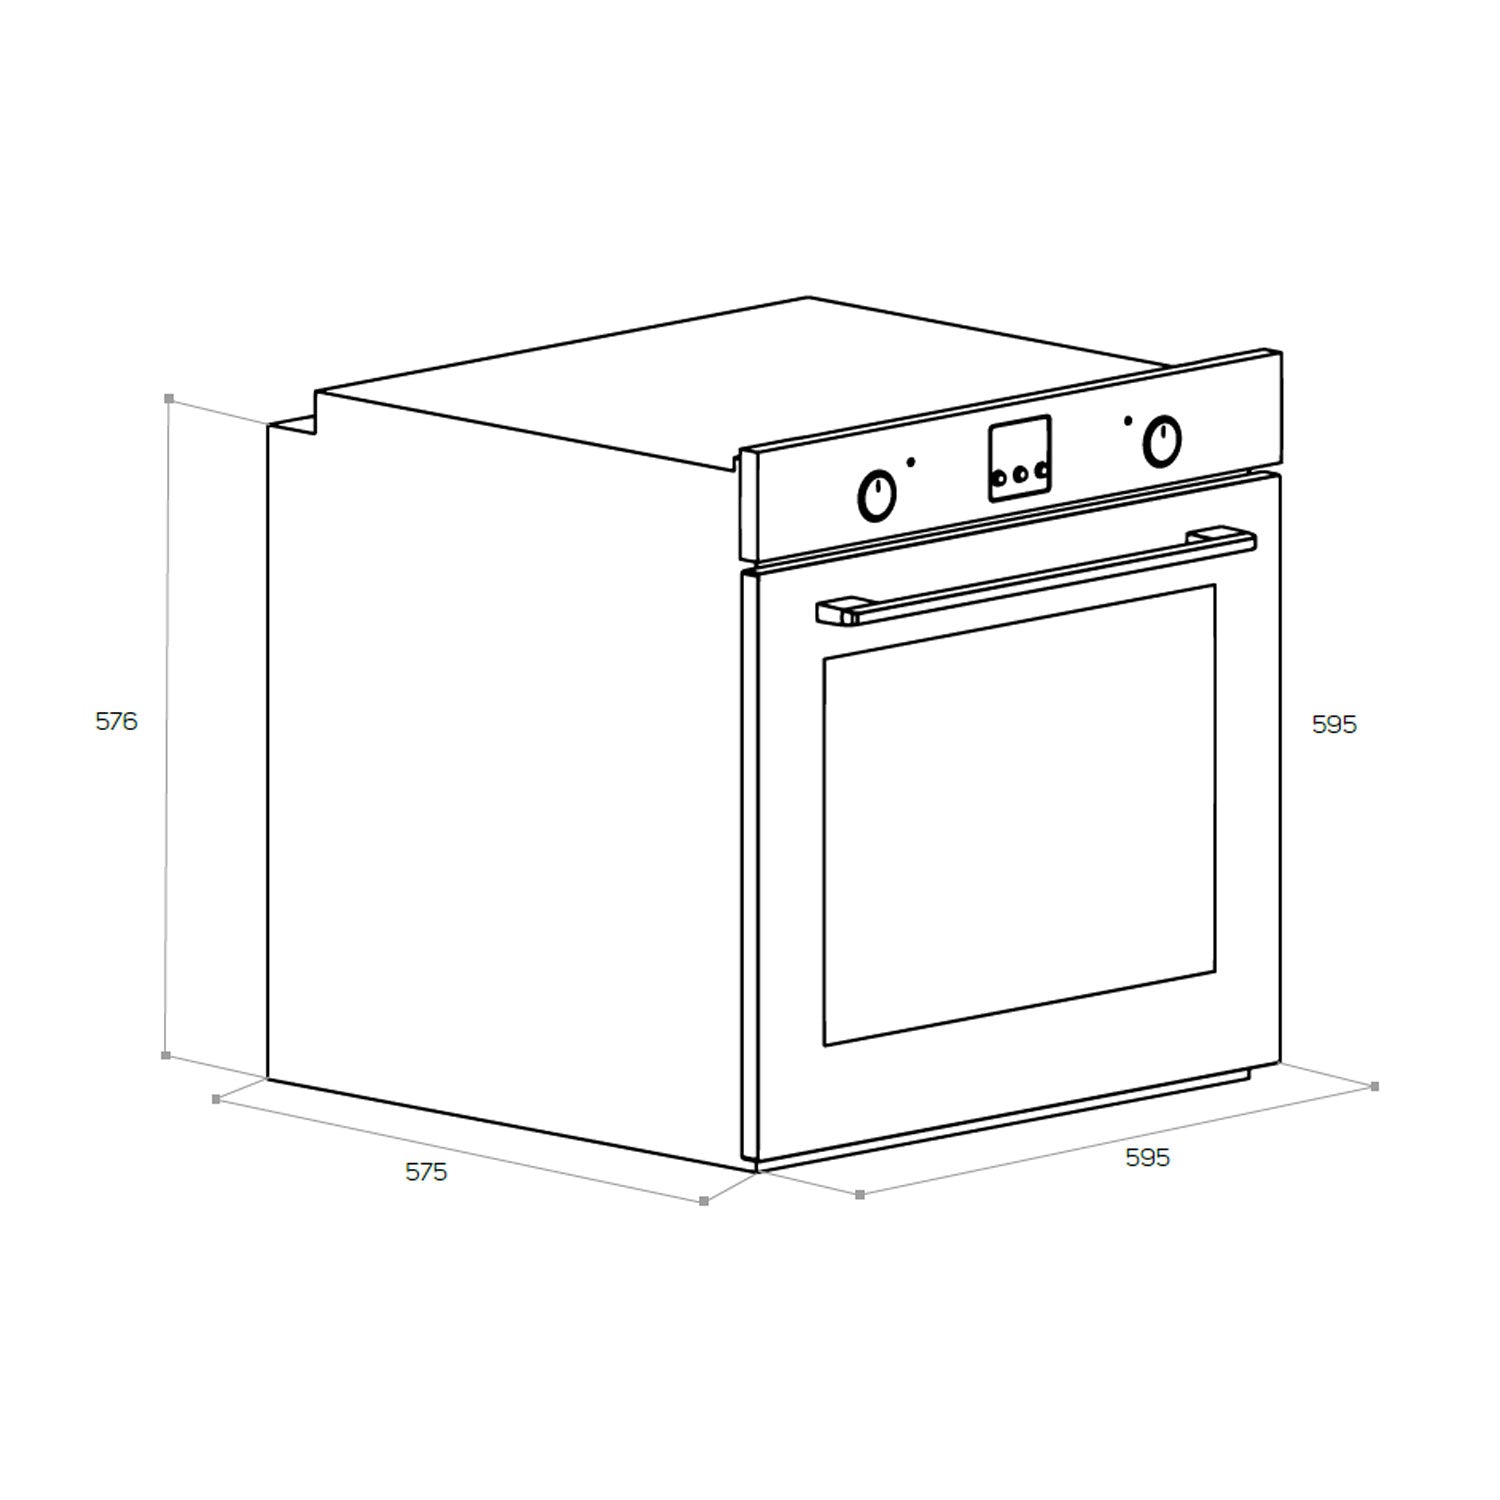 Integrable ovens – Taurus